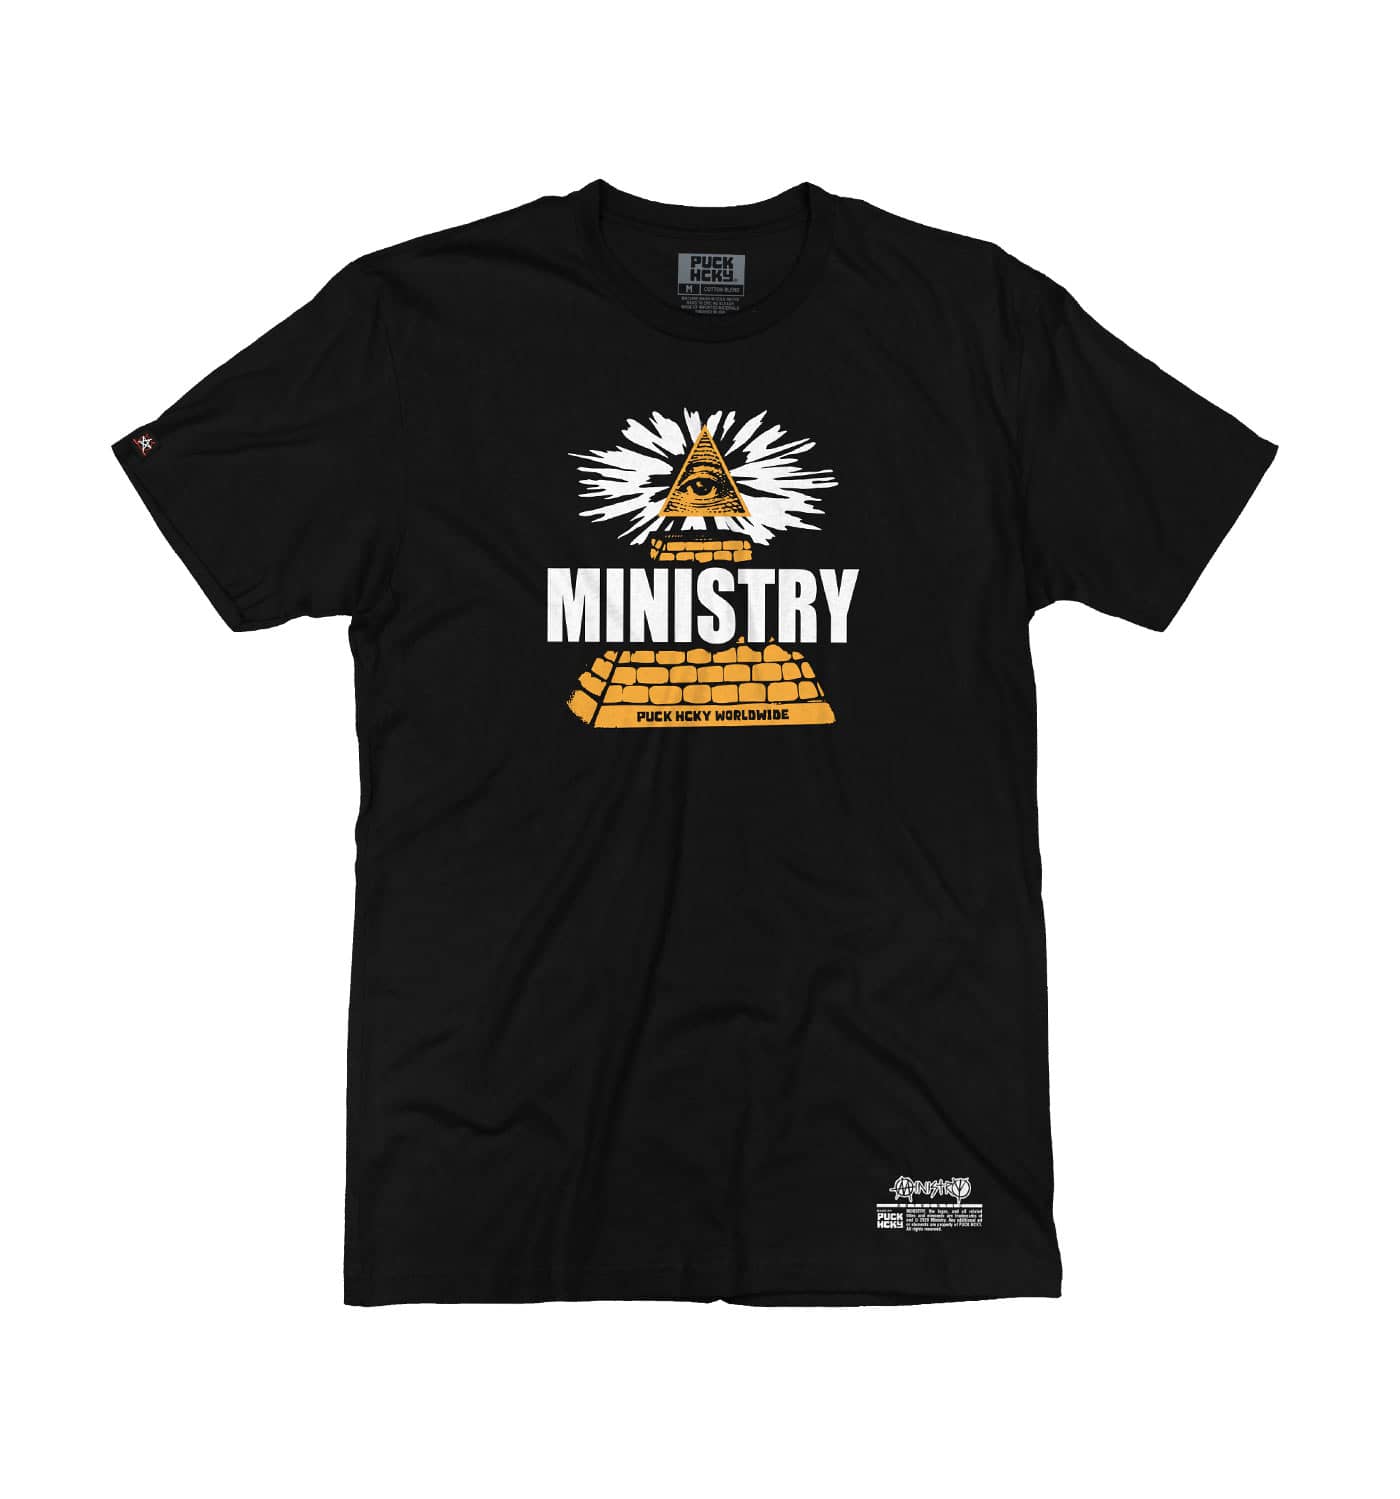 MINISTRY 'PYRAMID 81' short sleeve hockey t-shirt in black